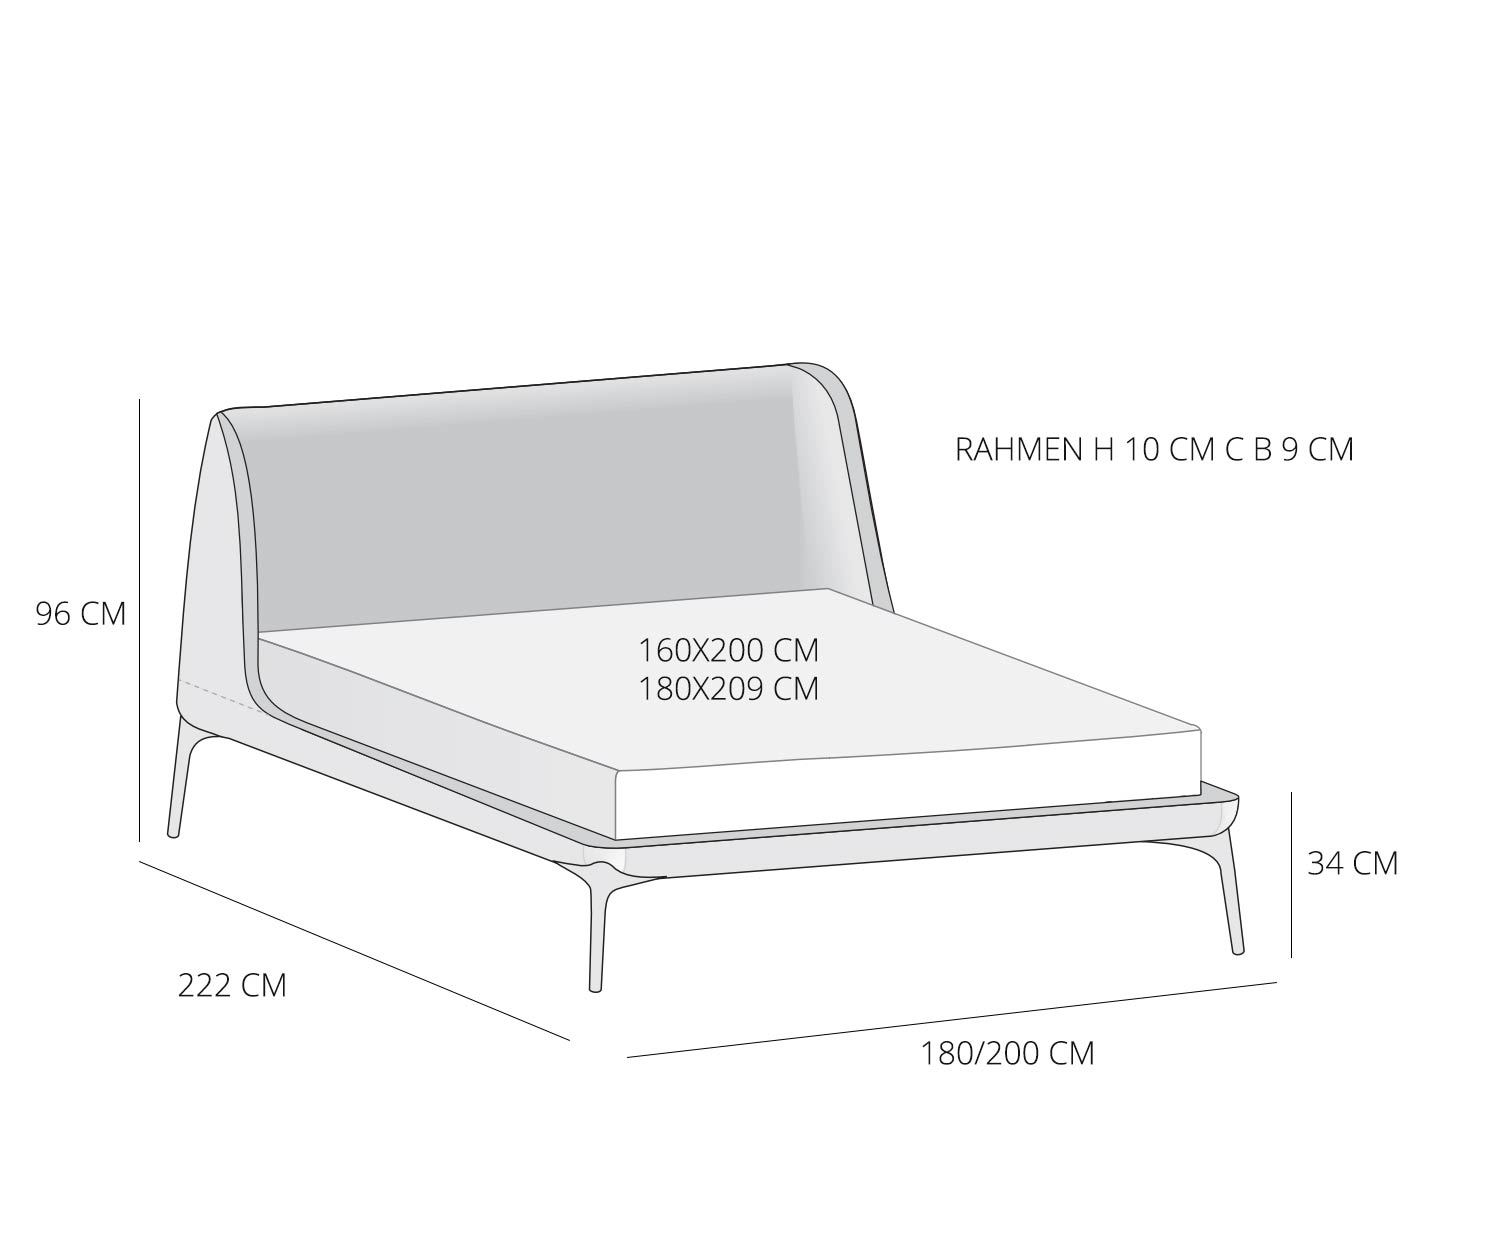 Bedroom bed Velvet from Novamobili Sketch Dimensions Sizes Size specifications